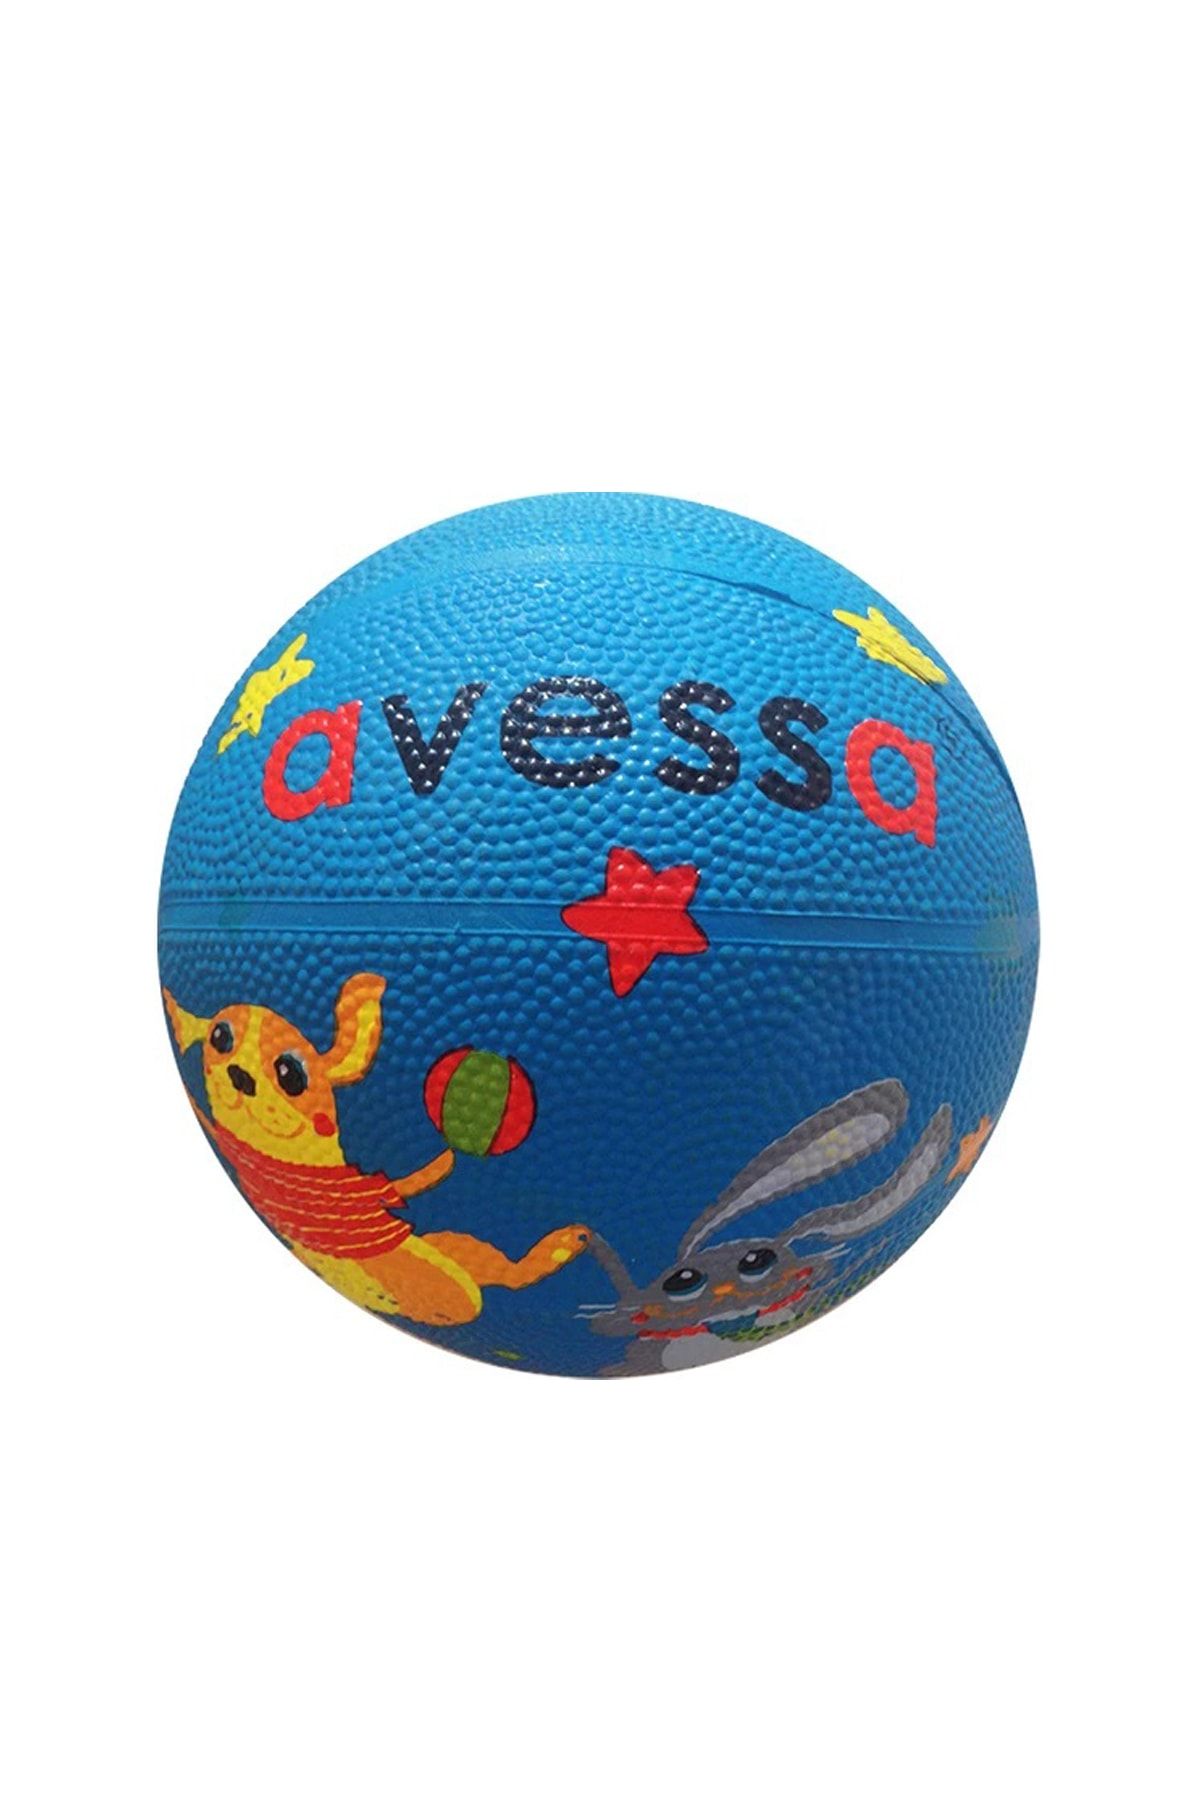 Avessa Basketbol Topu No:1 Mavi